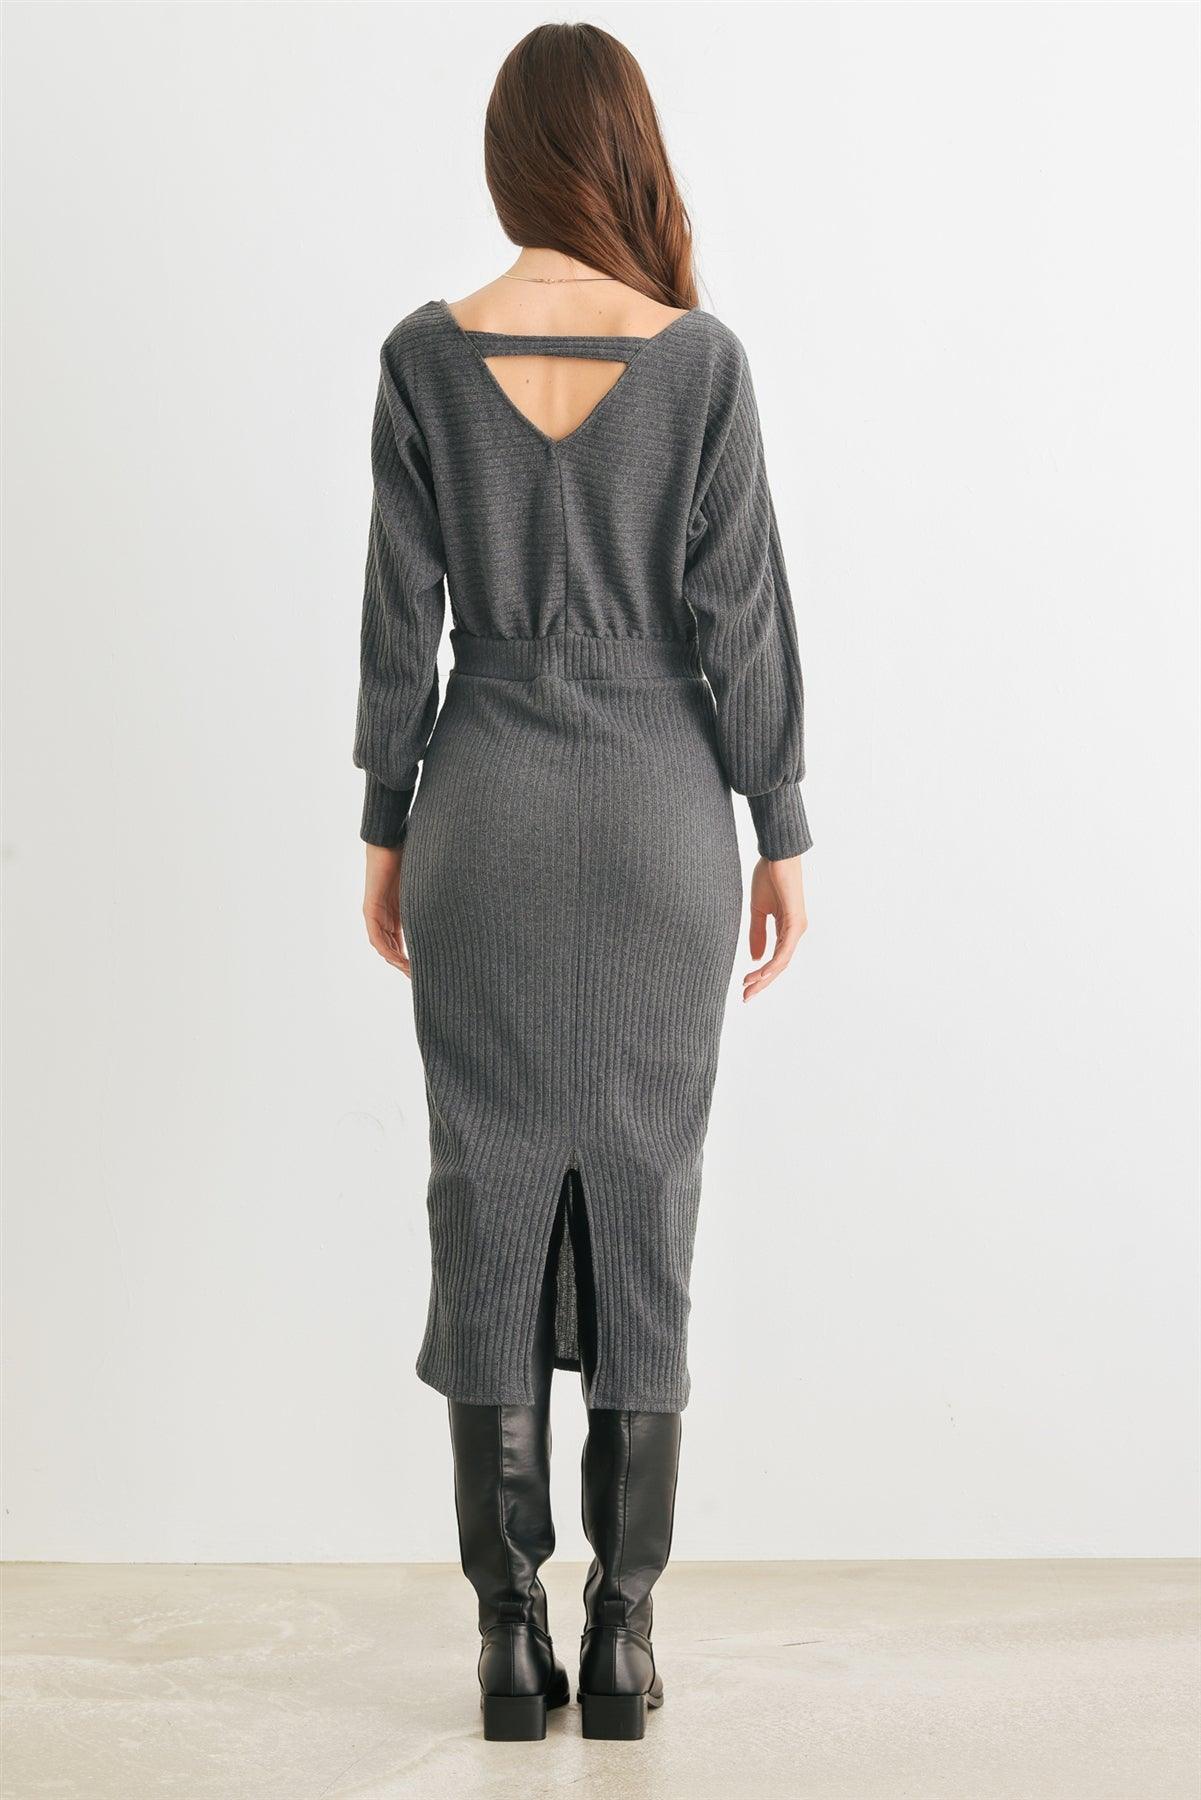 Dark Olive Ribbed Knit Cut-Out Back Long Sleeve Midi Dress /3-2-2